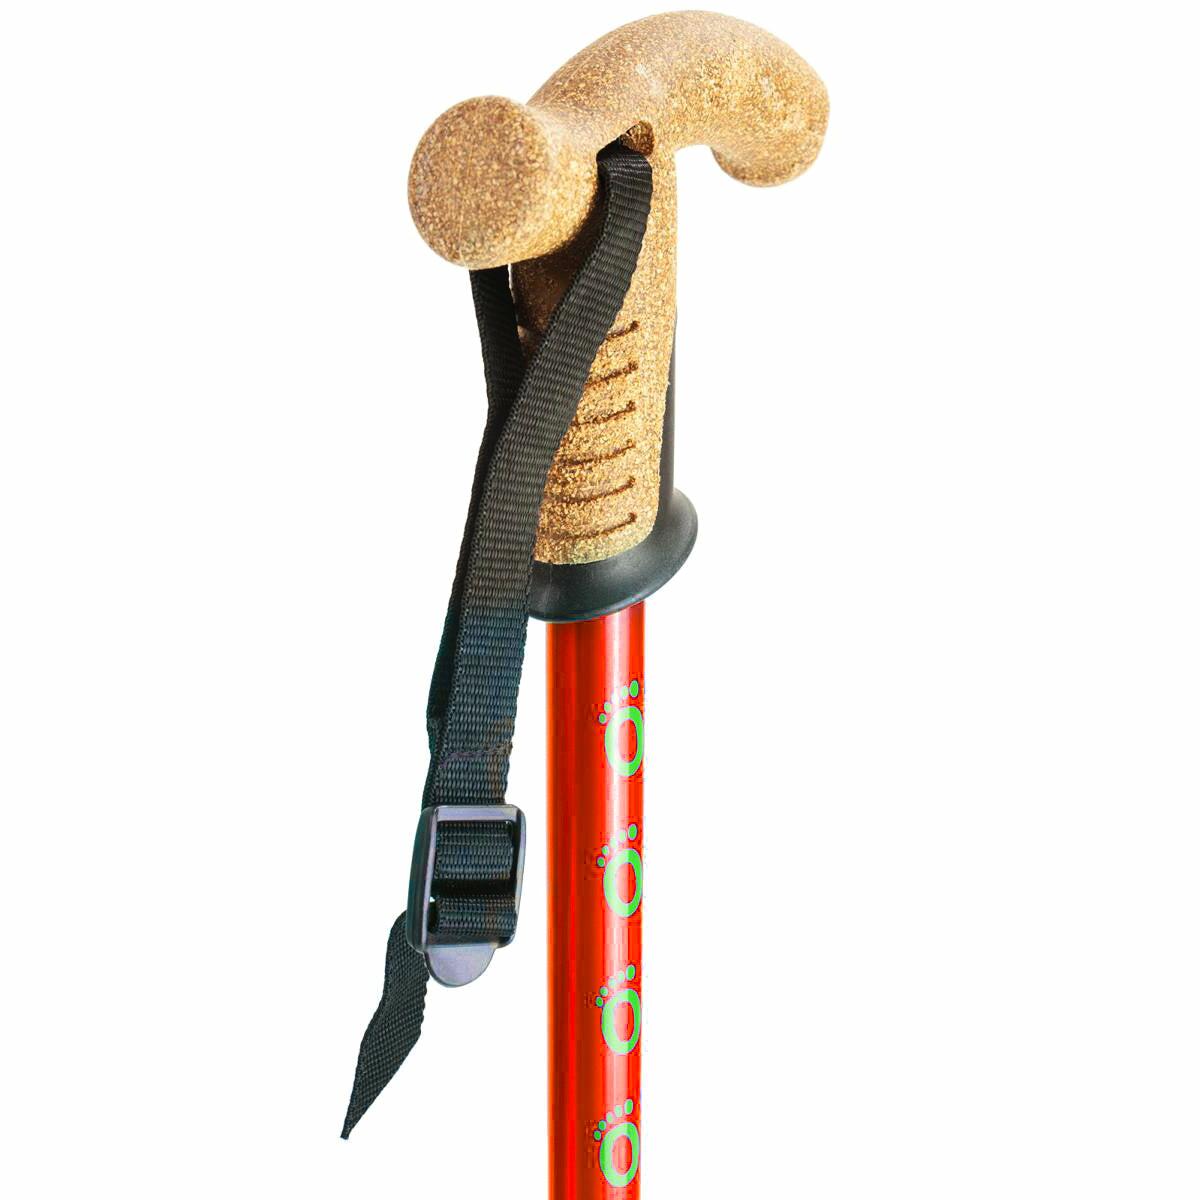 The cork handle of a red Flexyfoot Premium Cork Handle Walking Stick